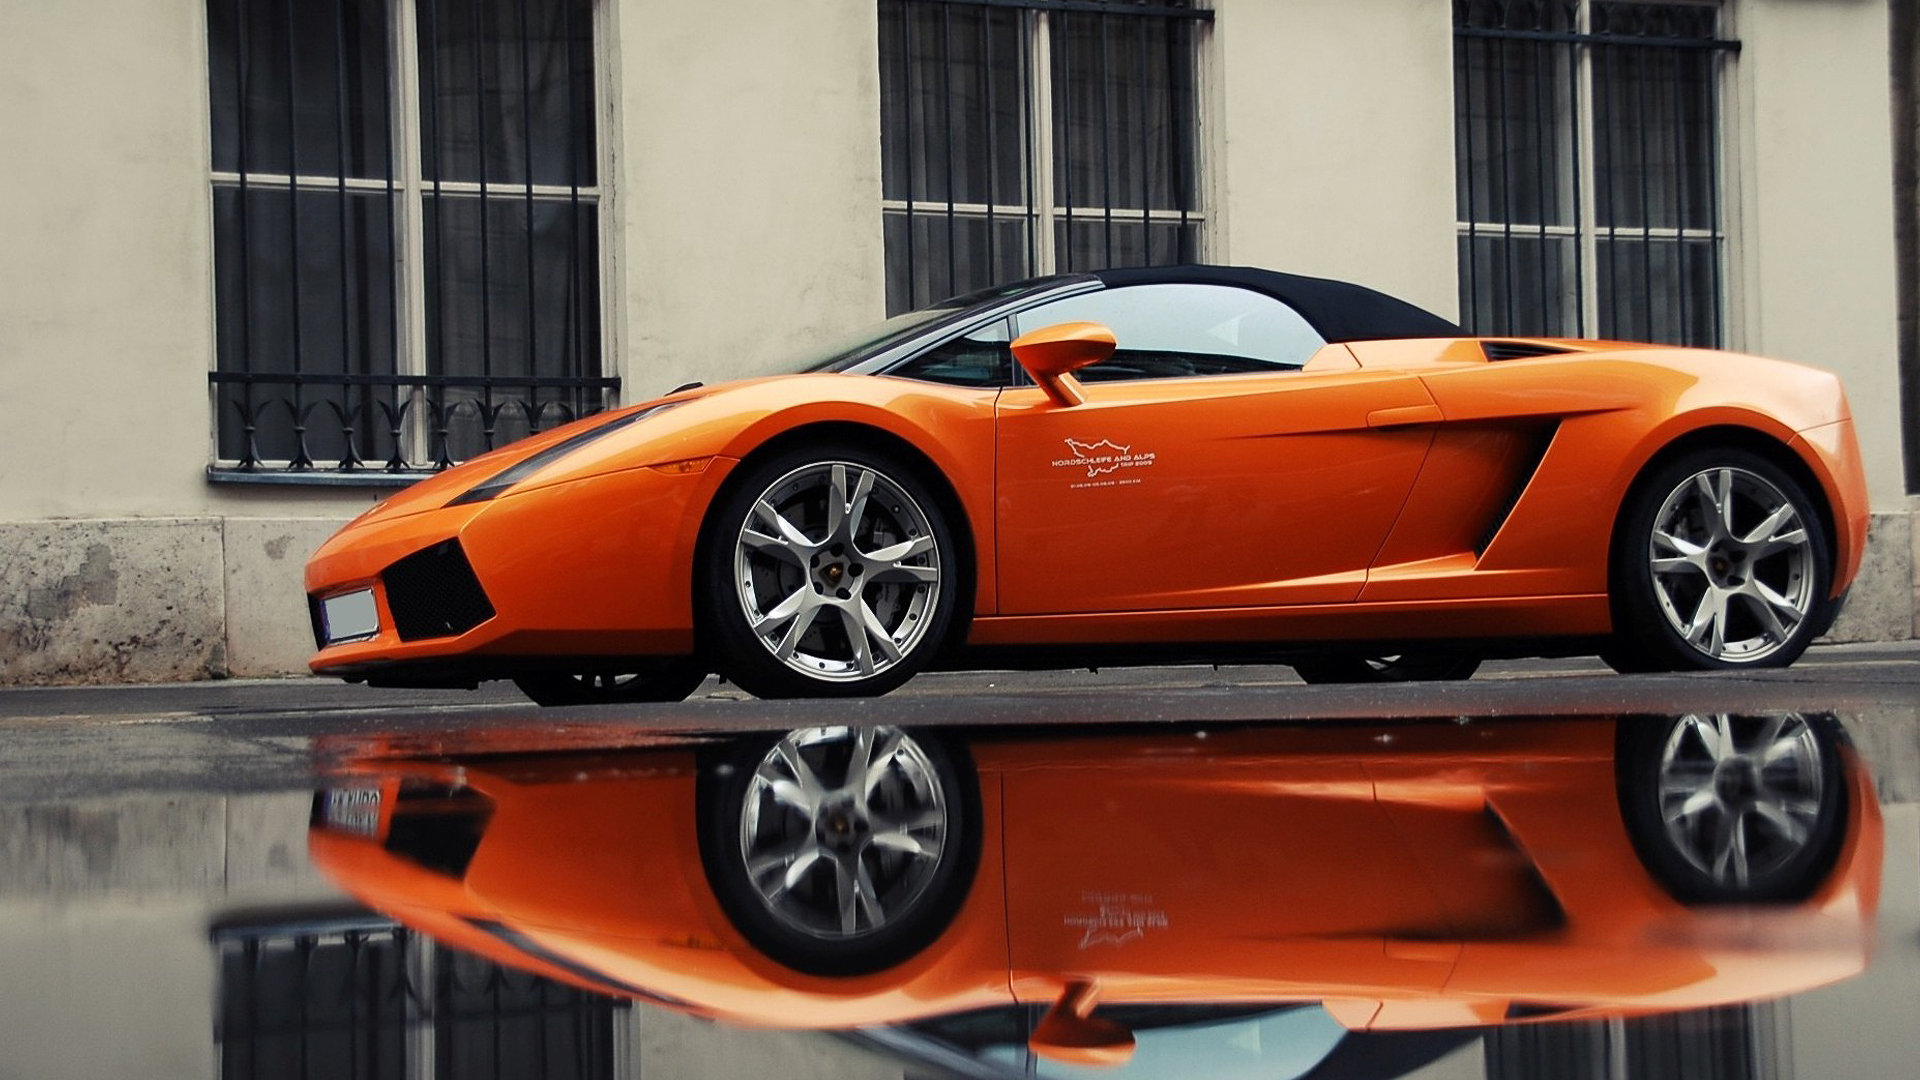 Best Lamborghini Gallardo wallpaper ID:293054 for High Resolution full hd PC